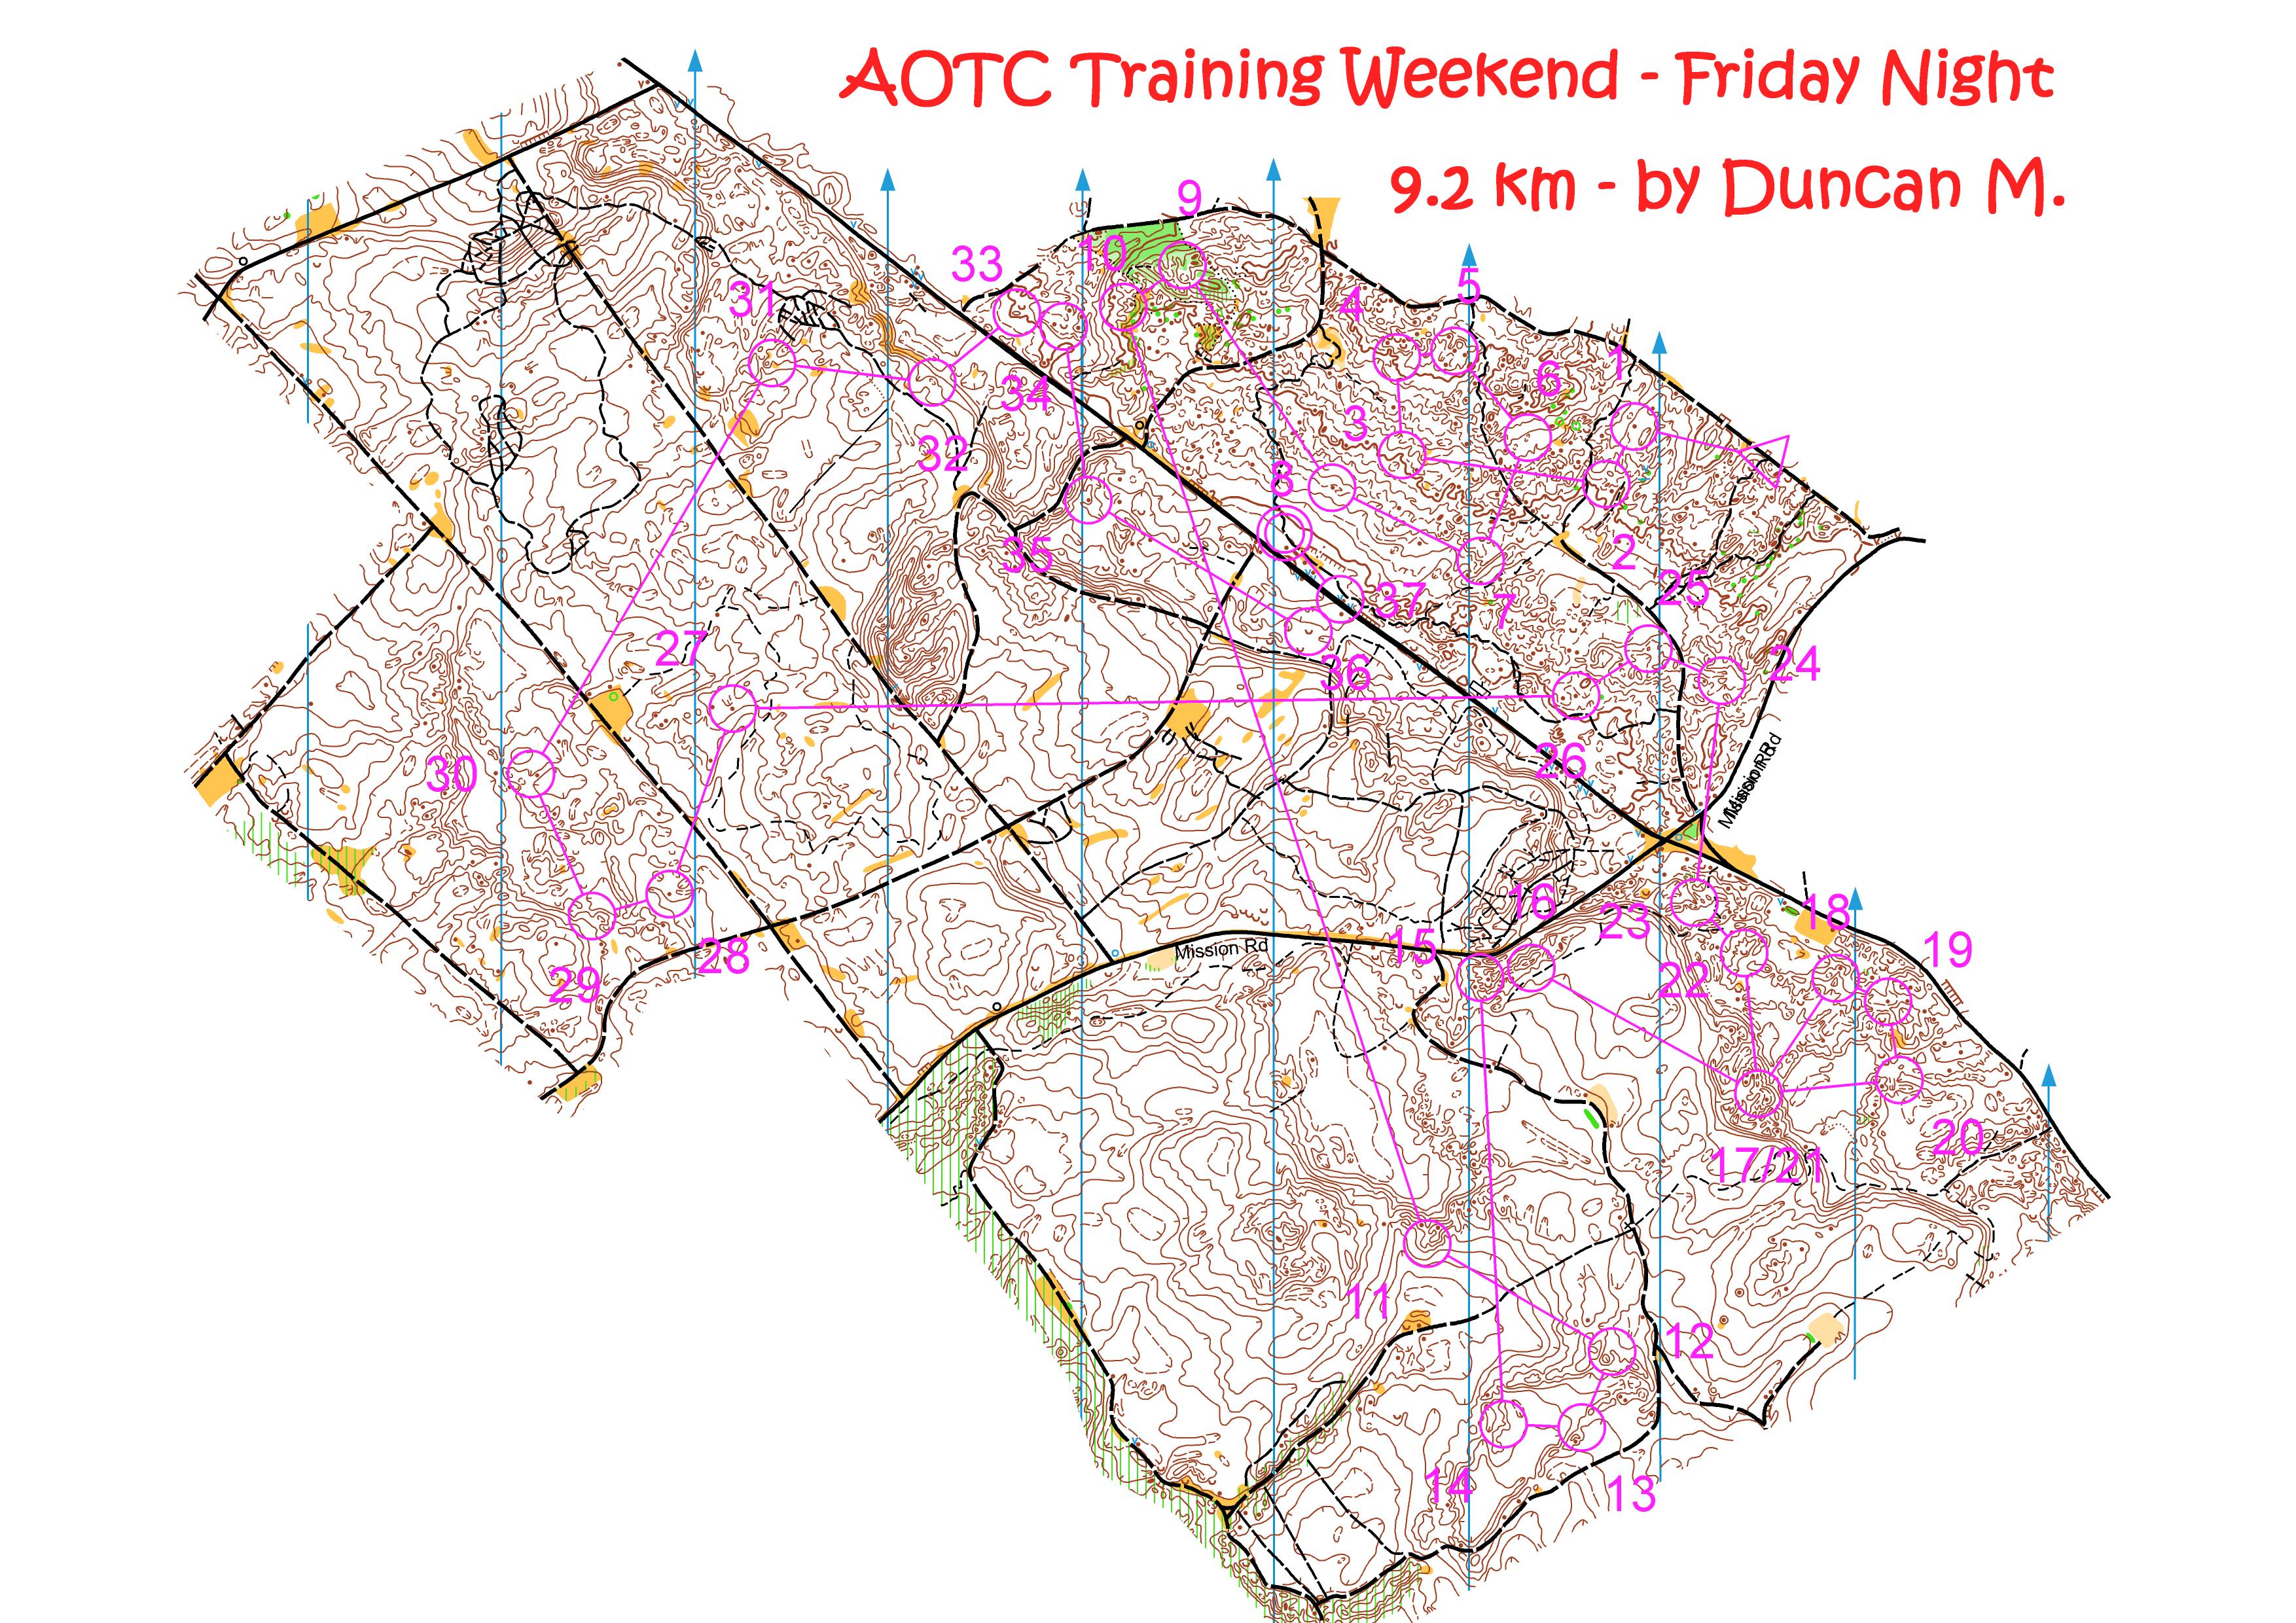 AOTC Training Weekend - Friday Night (2012-11-16)